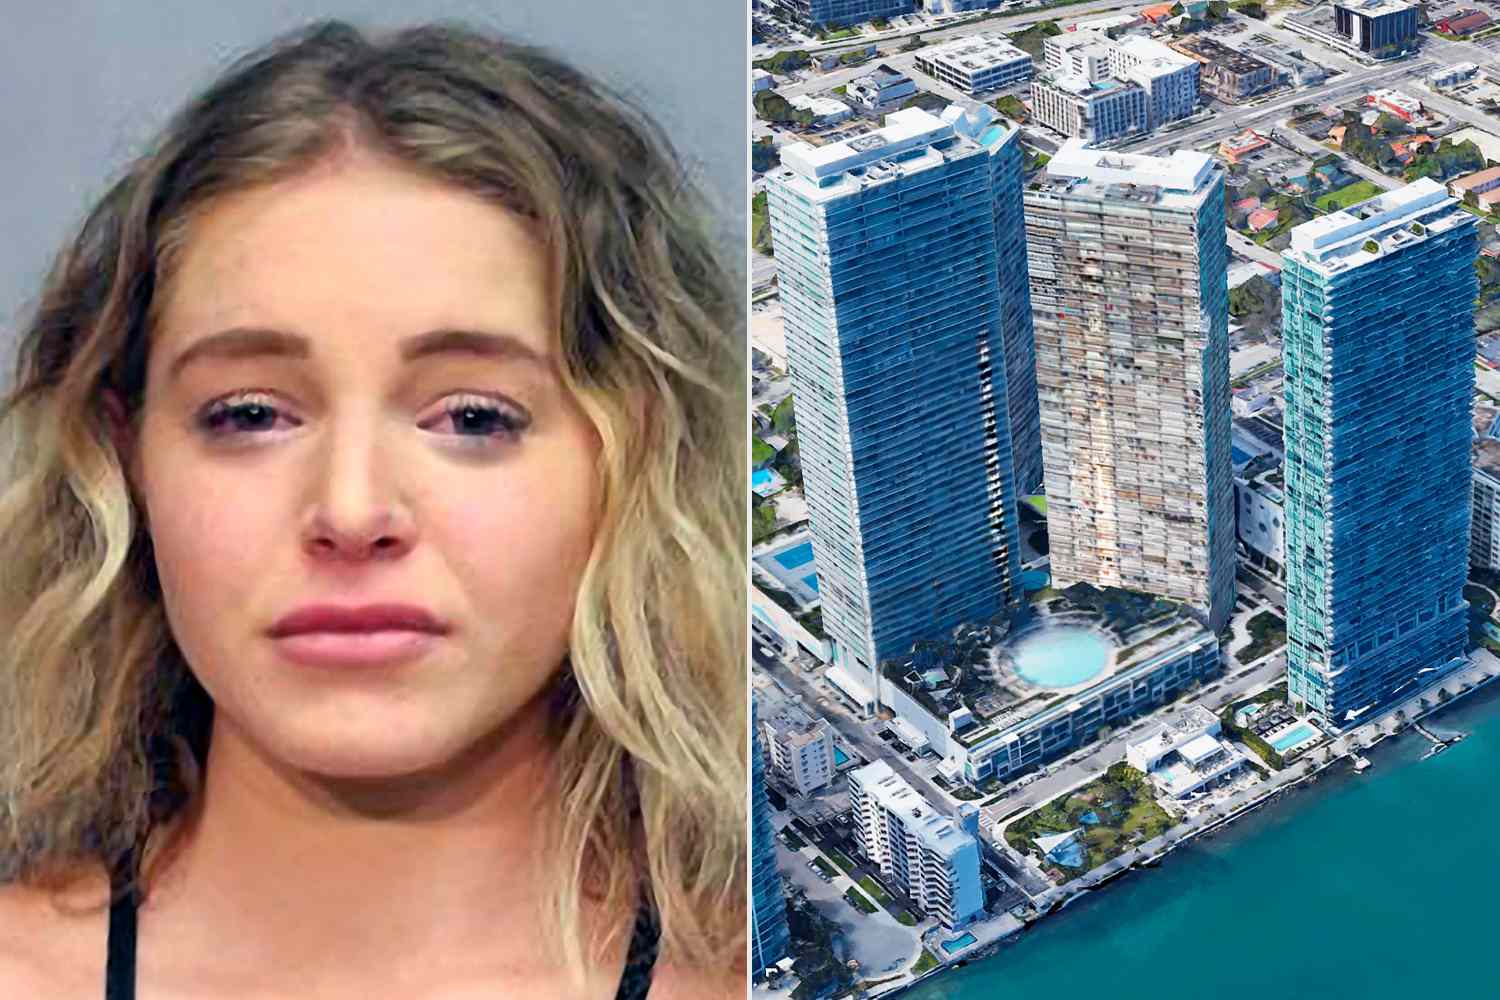 An OnlyFans Model Killed Her Boyfriend in Miami: Murder or Self-Defense? [Video]